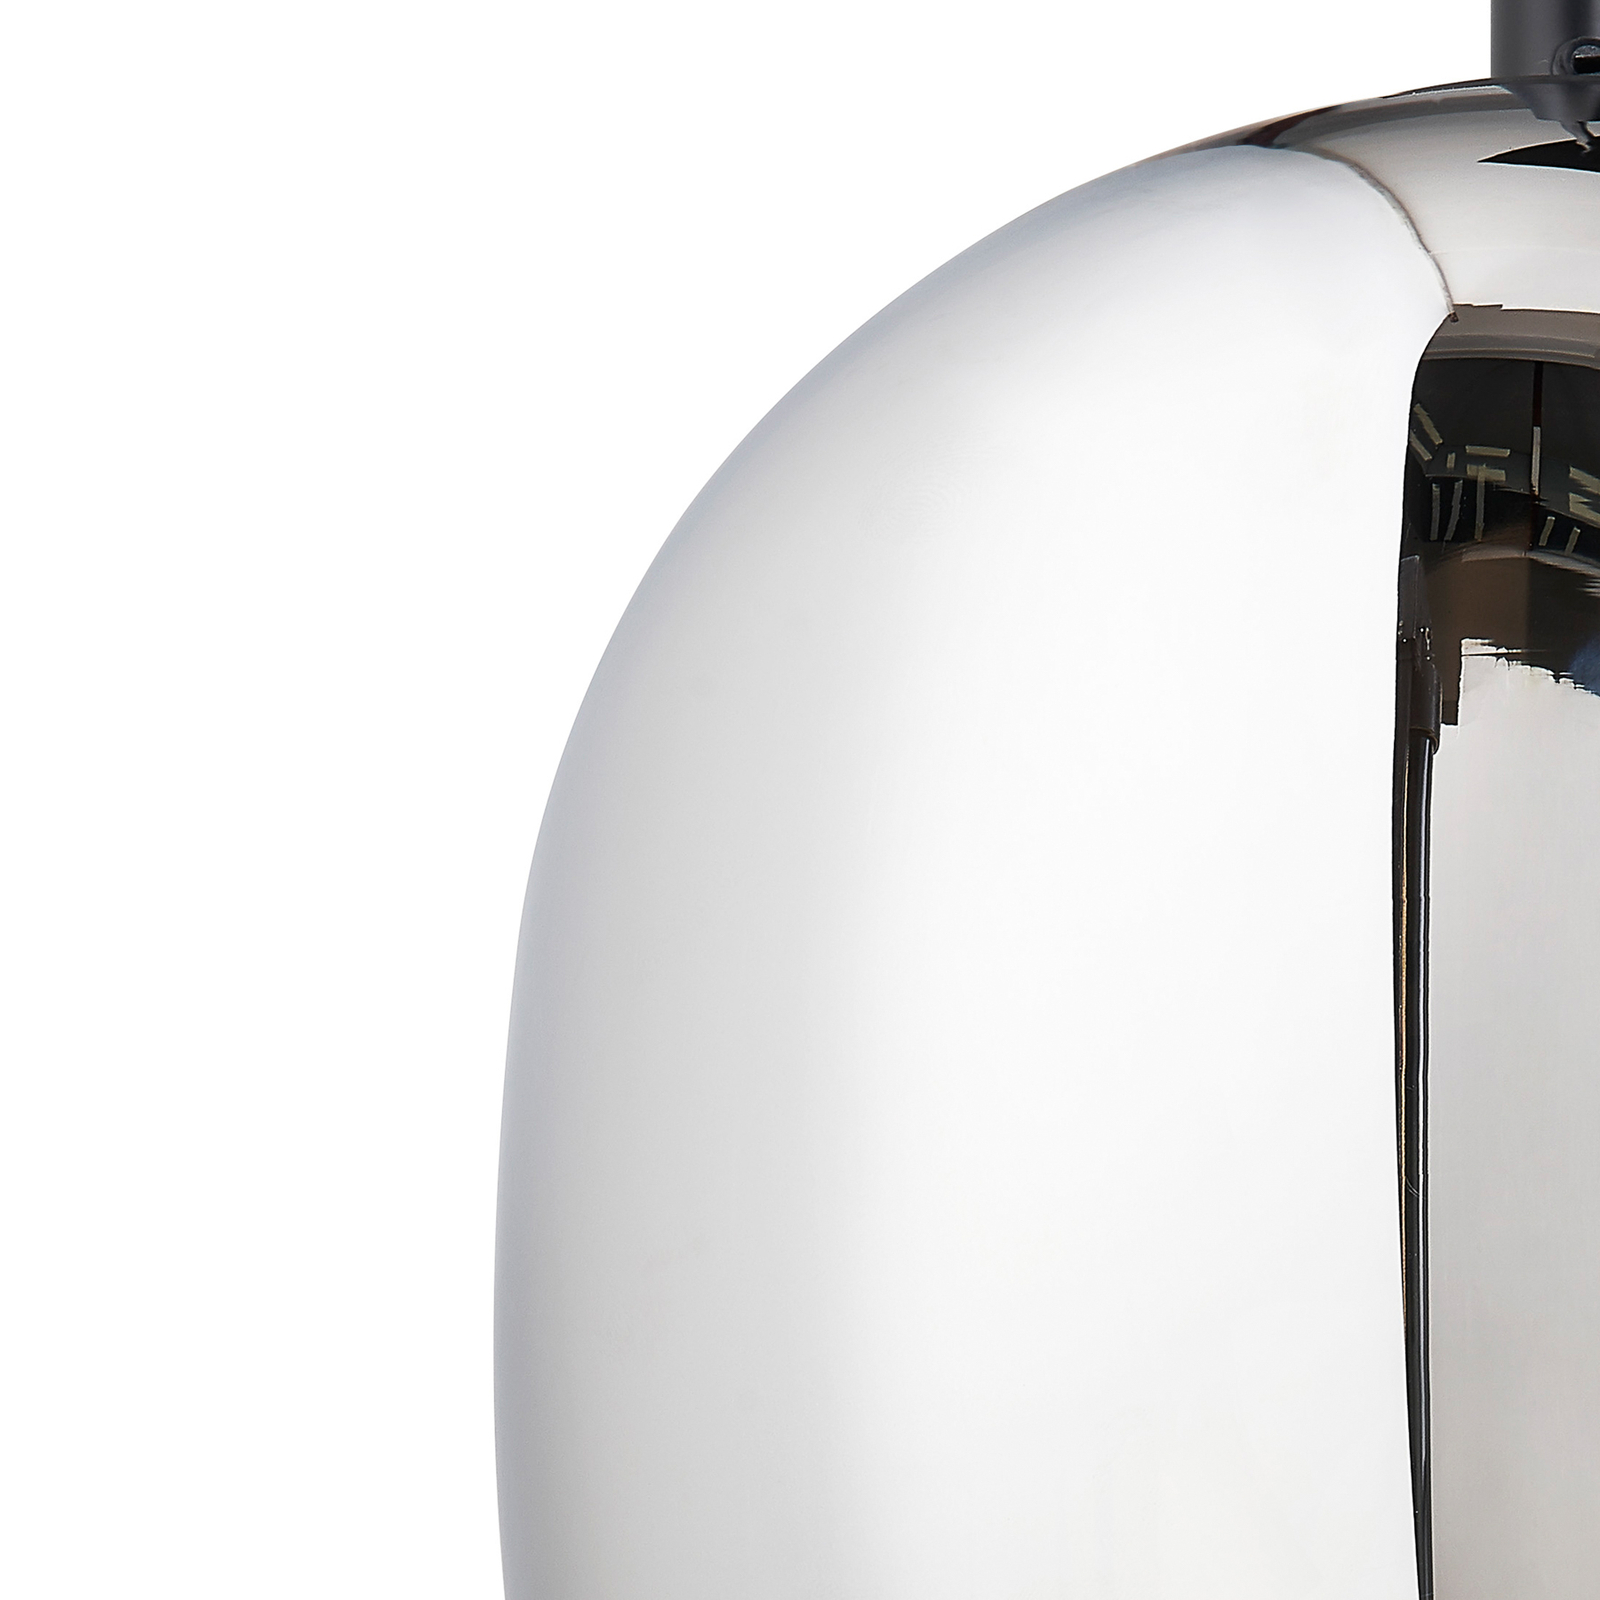 Lindby Gileos rookglas-hanglamp, 6-lamps